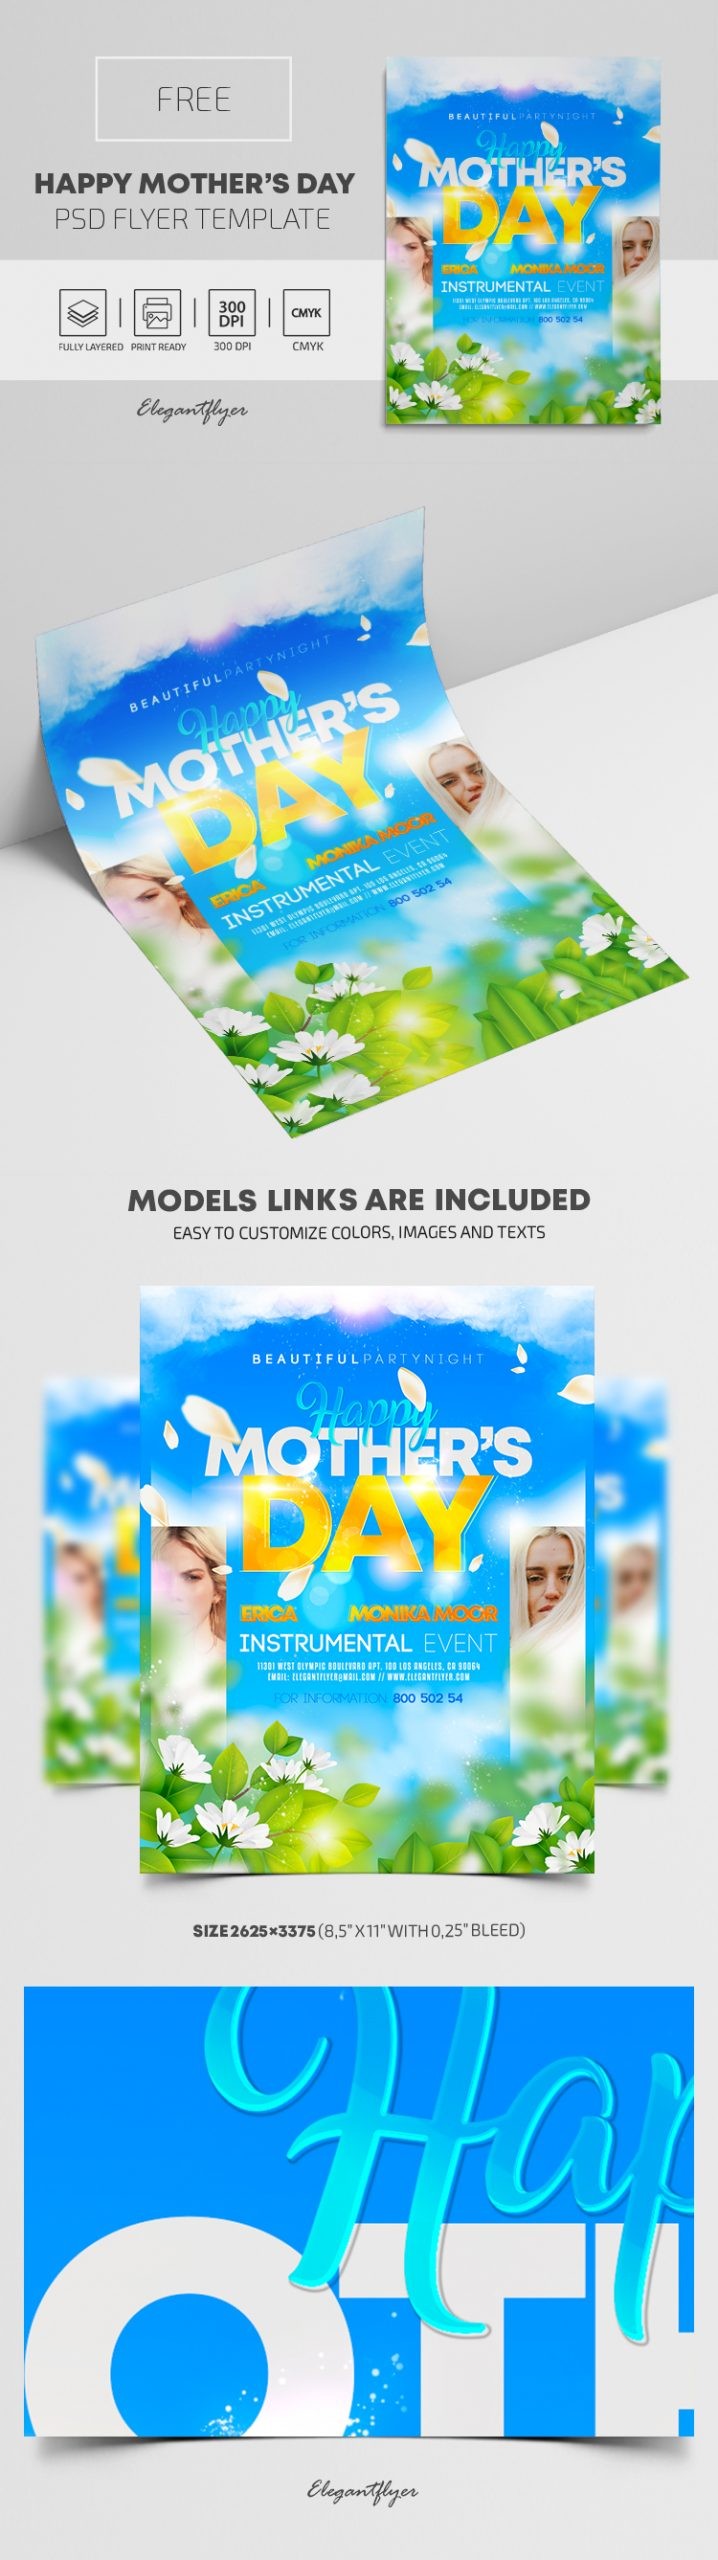 Happy Mother's Day Flyer - Flyer de joyeuse fête des mères by ElegantFlyer